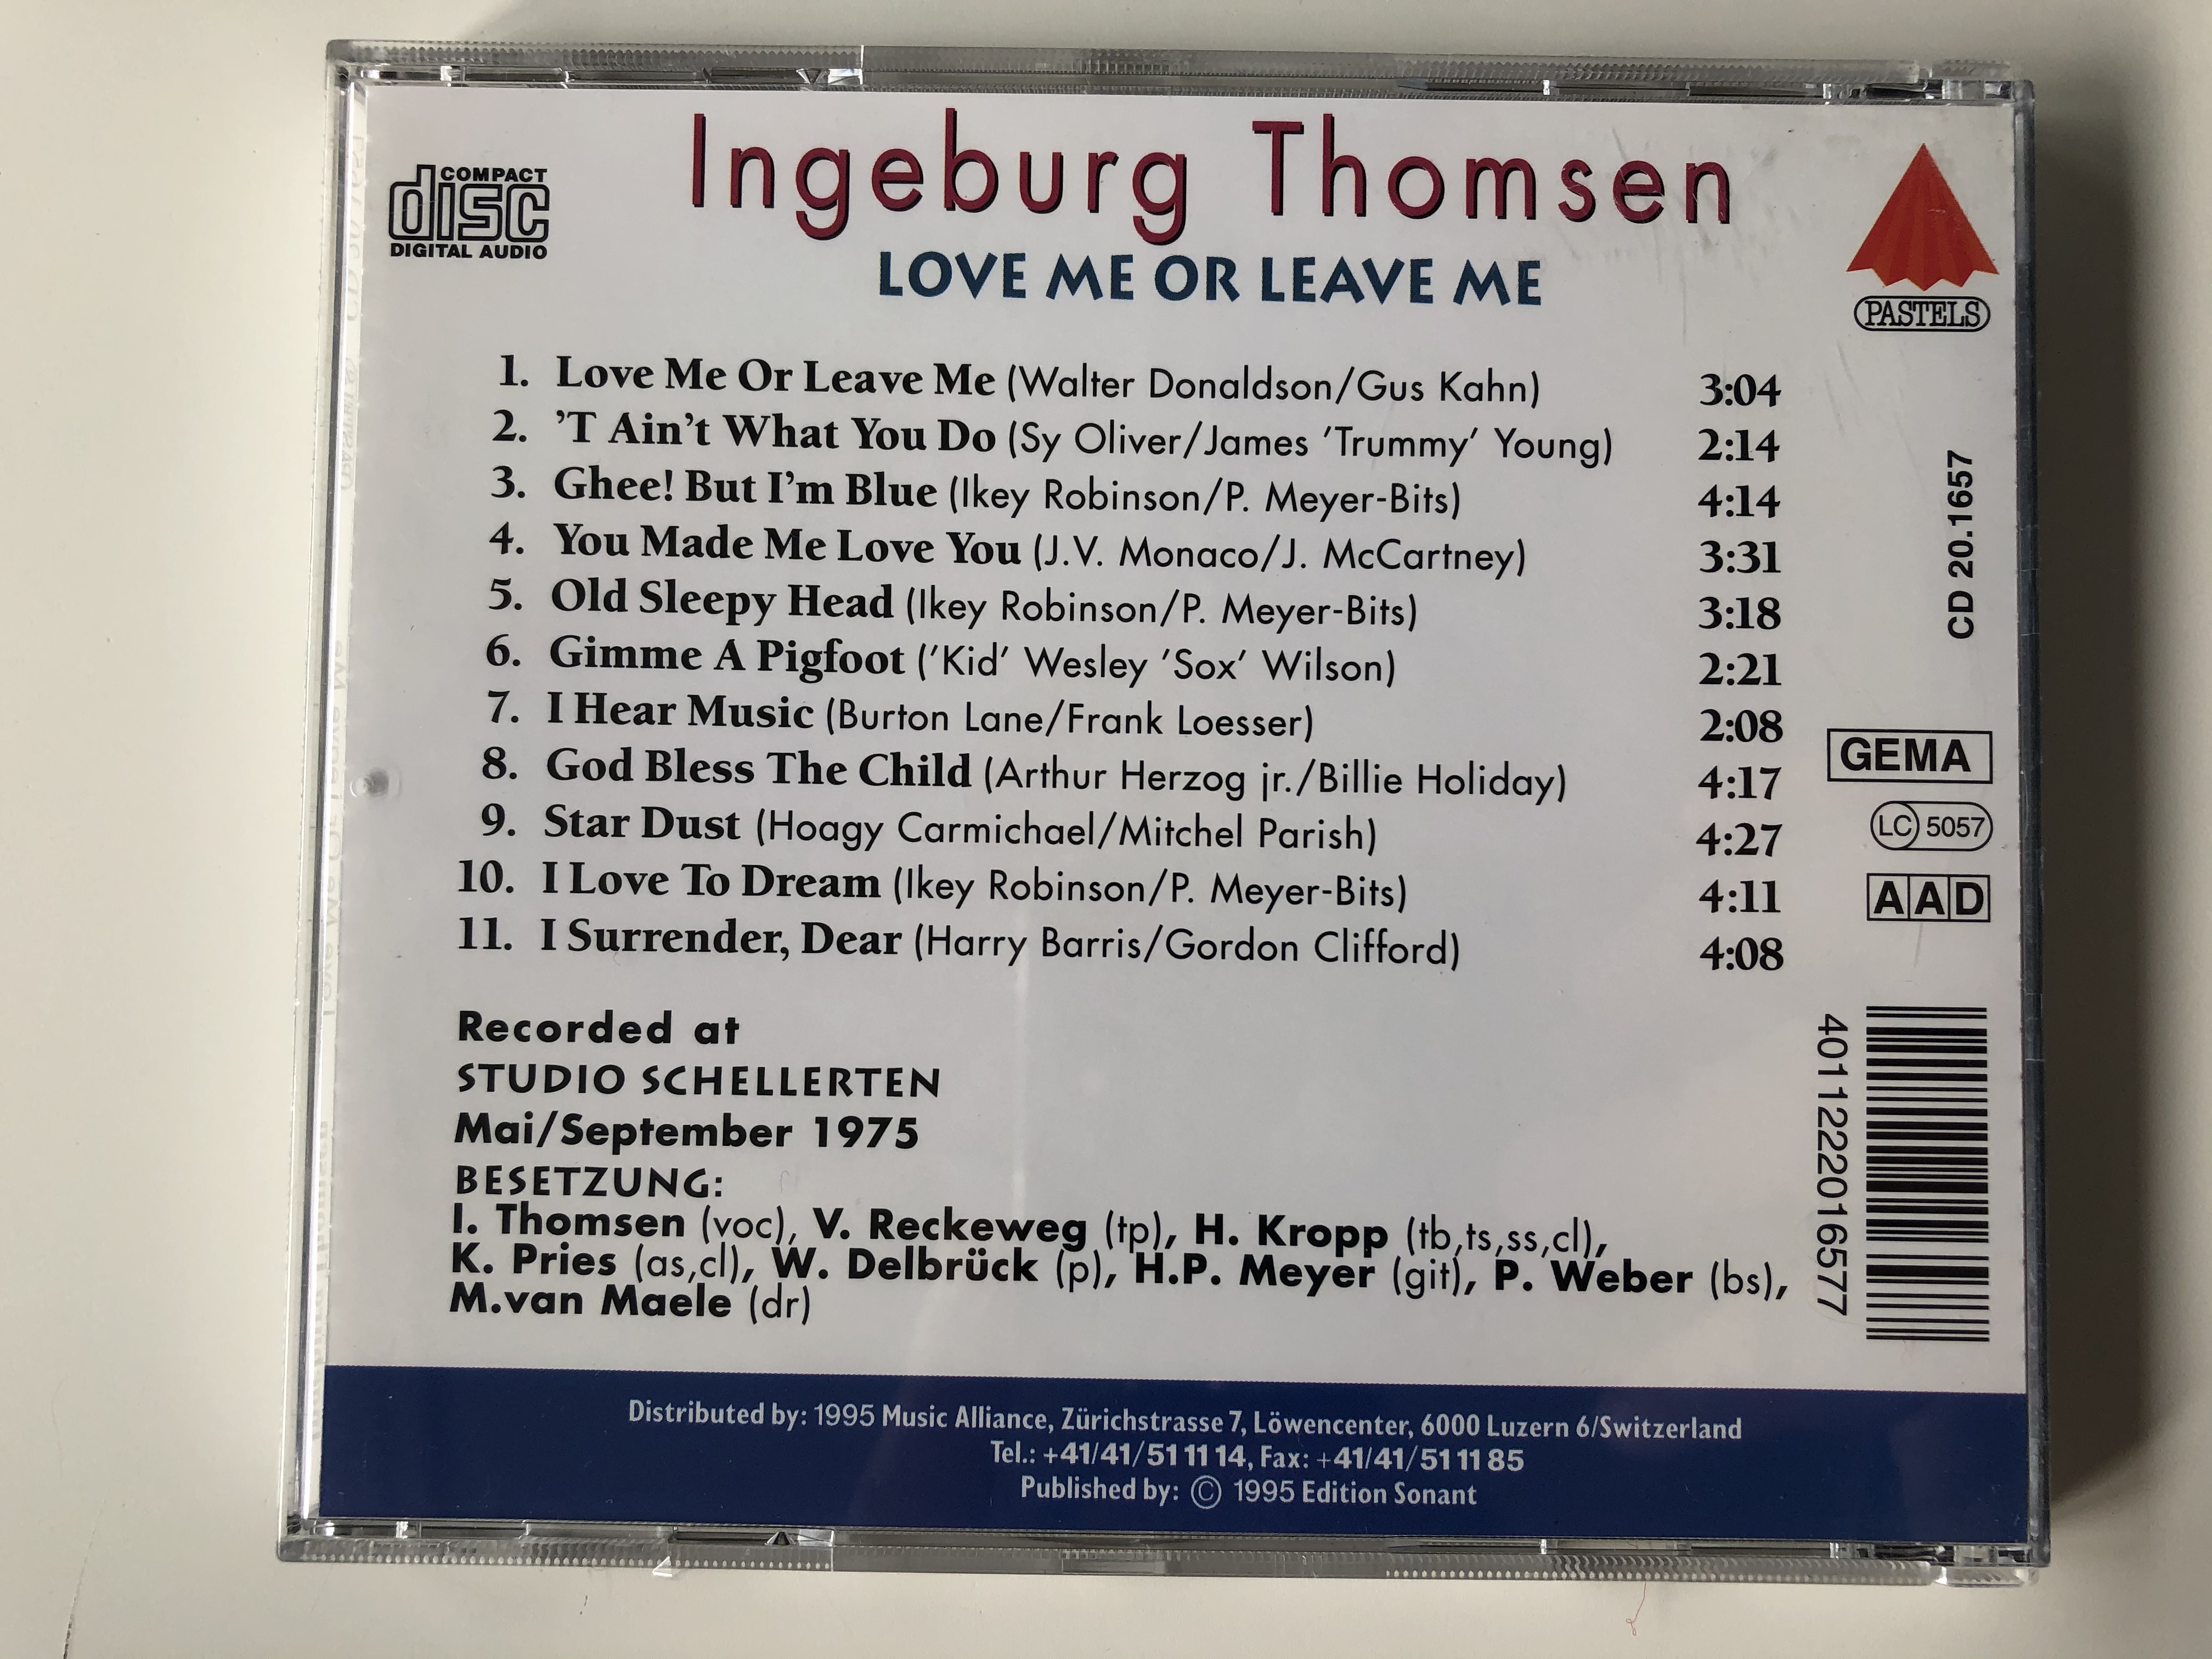 ingeburg-thomsen-love-me-or-leave-me-star-dust-i-love-to-dream-i-surrender-dear-god-bless-the-child-u.a.-digital-remastered-jazz-edition-pastels-audio-cd-1995-cd-20-3-.jpg